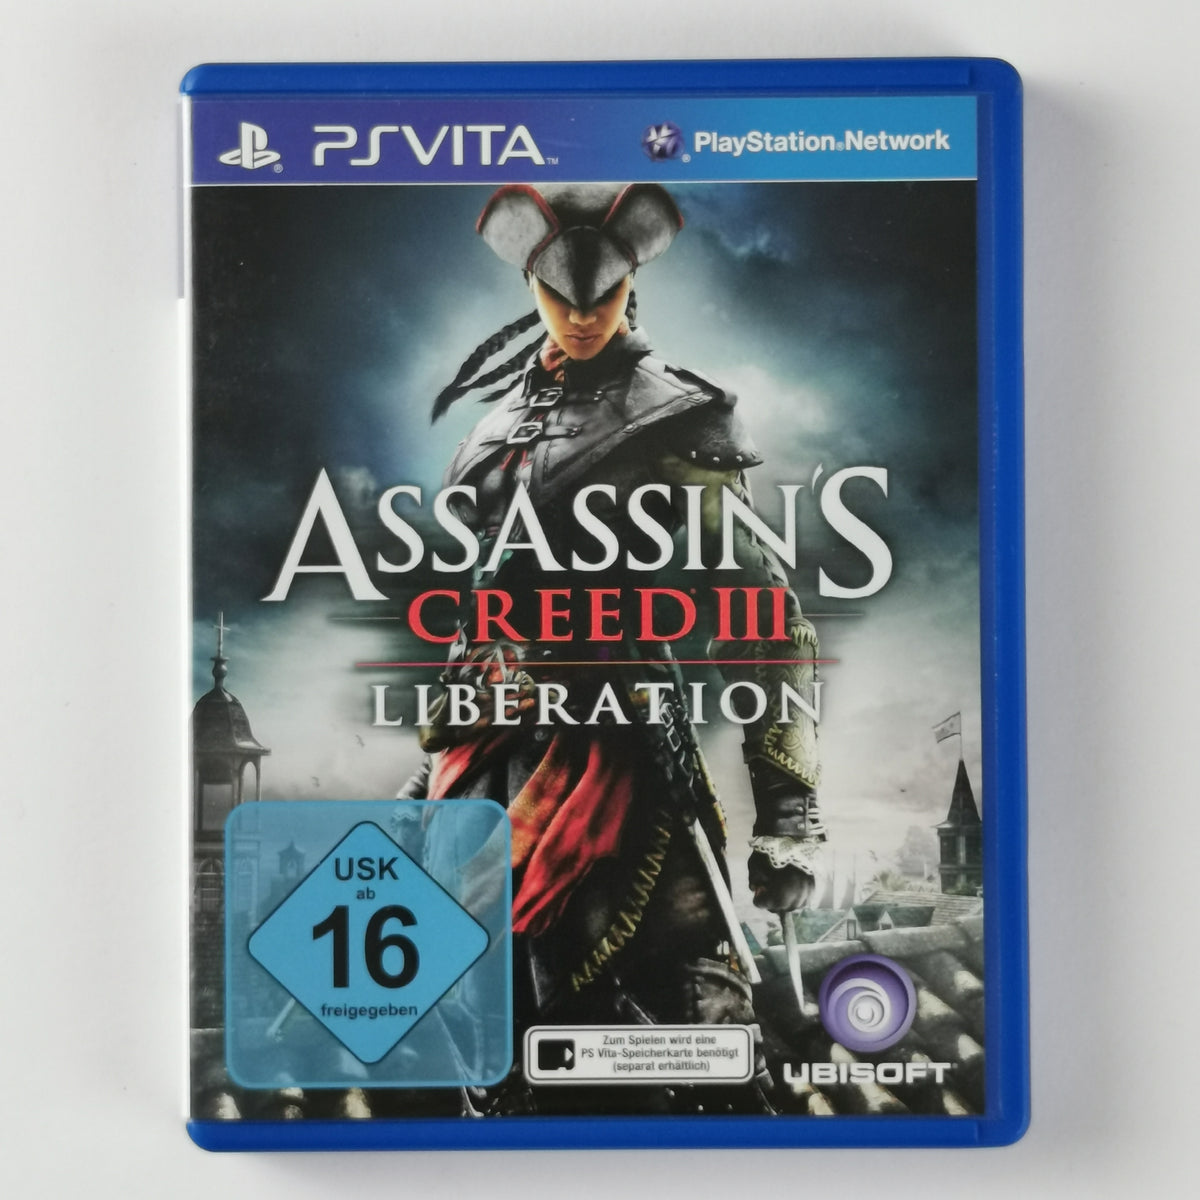 Assassins Creed 3: Liberation [PSV]